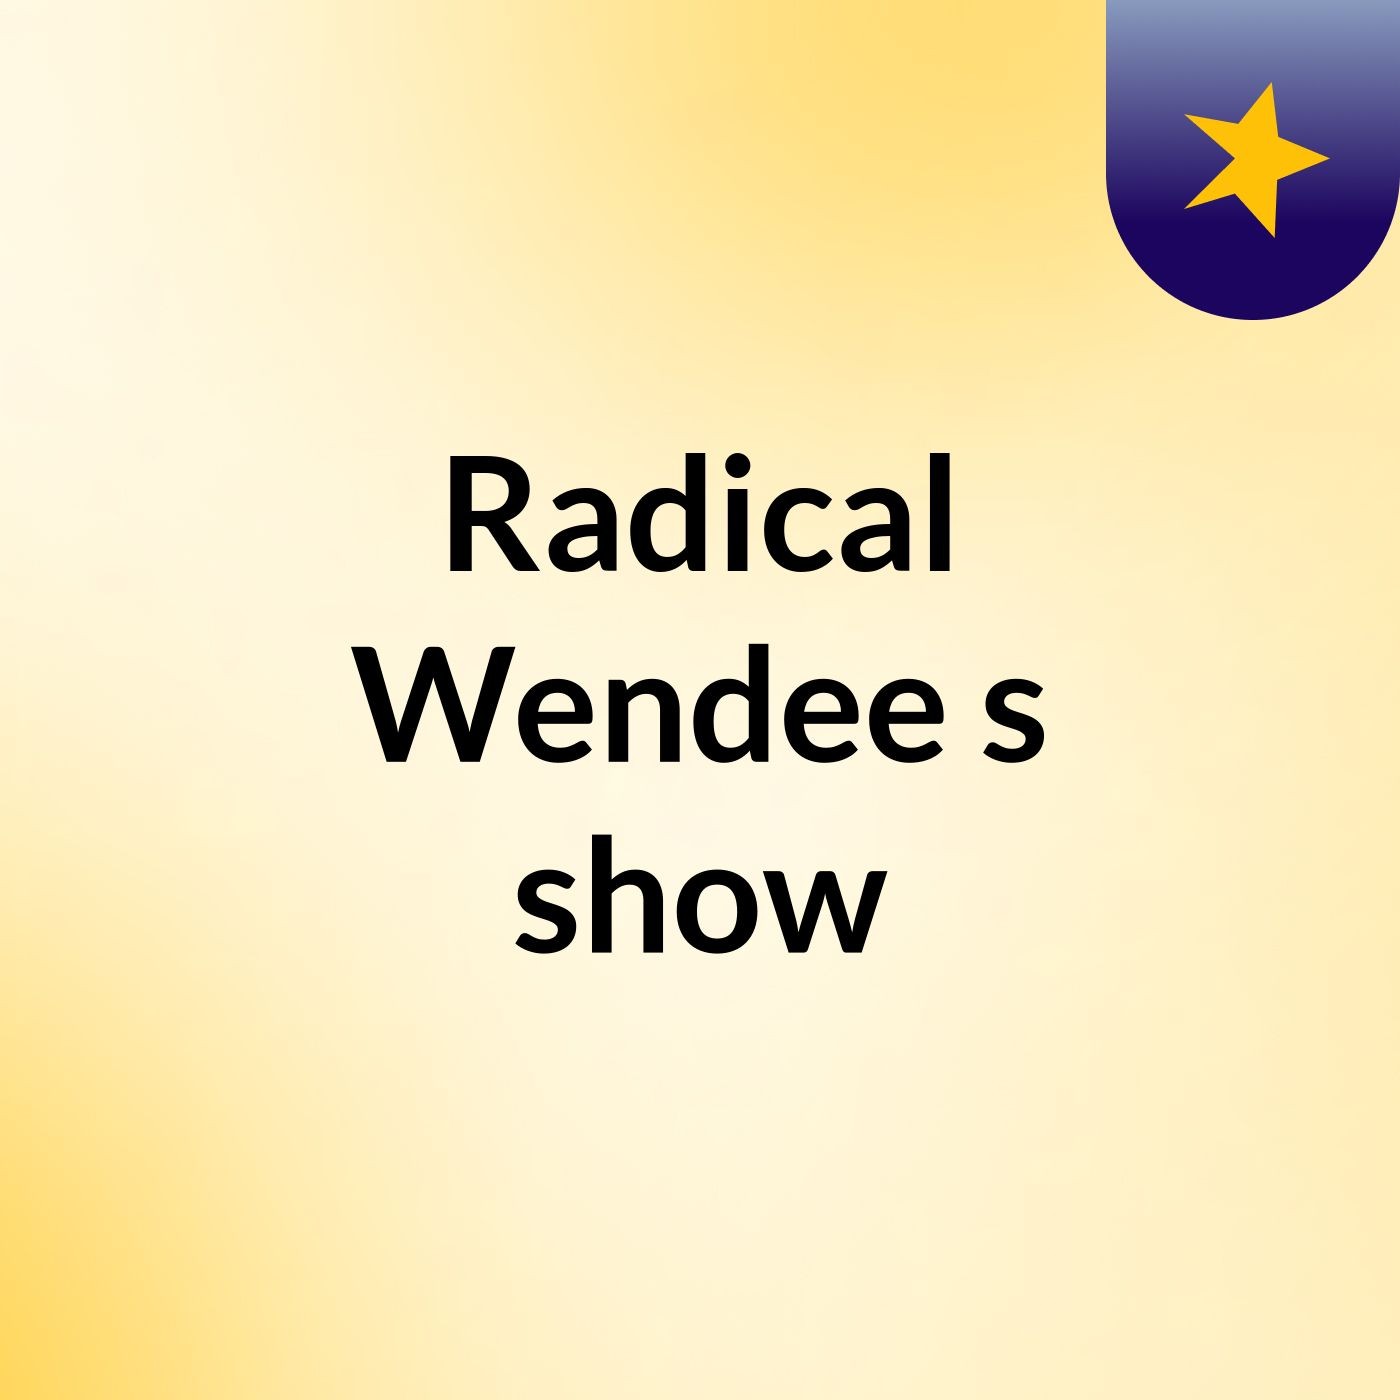 Radical Wendee's show